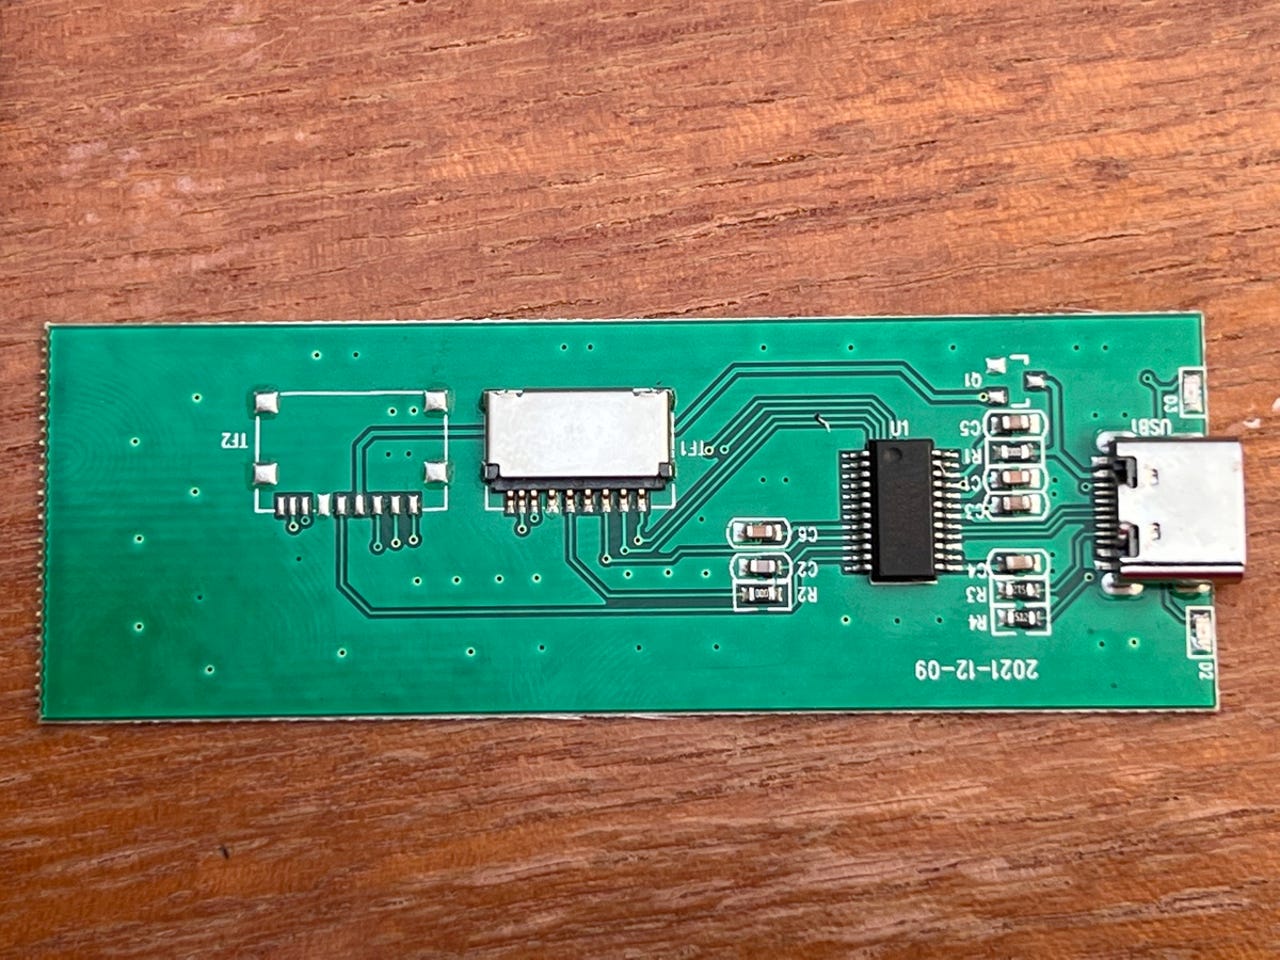 Essentially a USB-C microSD card reader